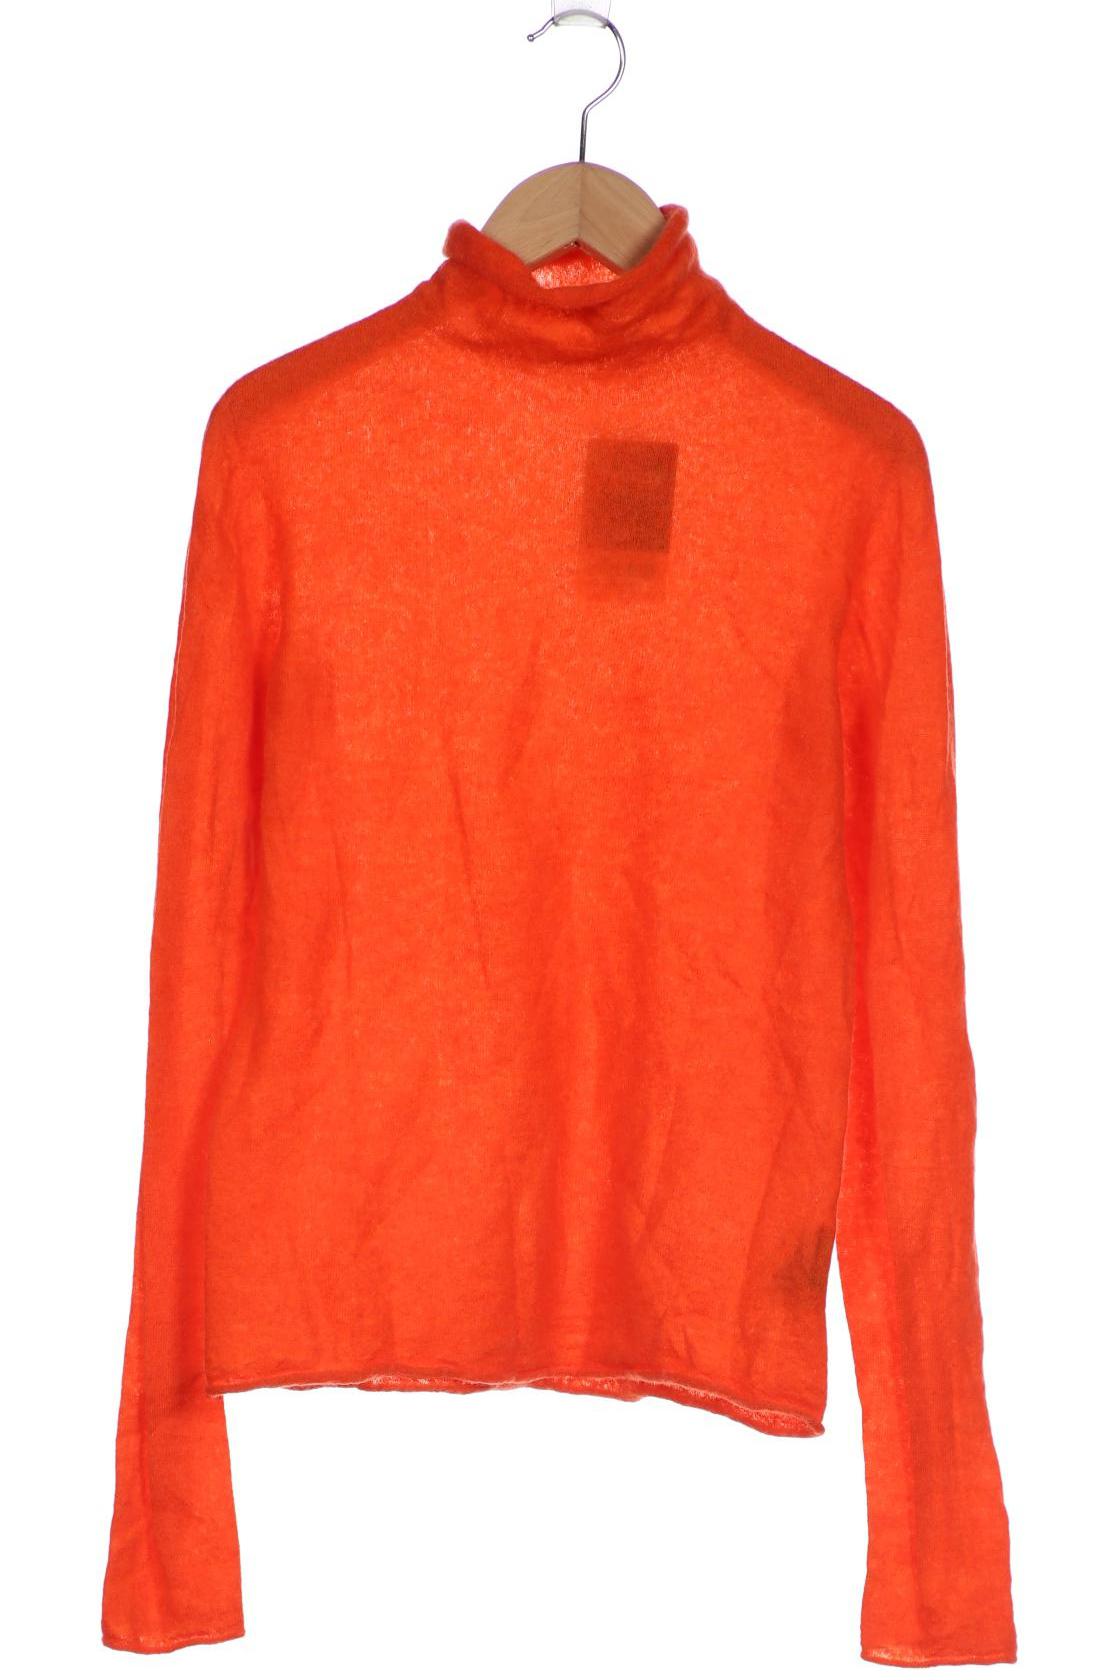 COS Damen Pullover, orange von COS